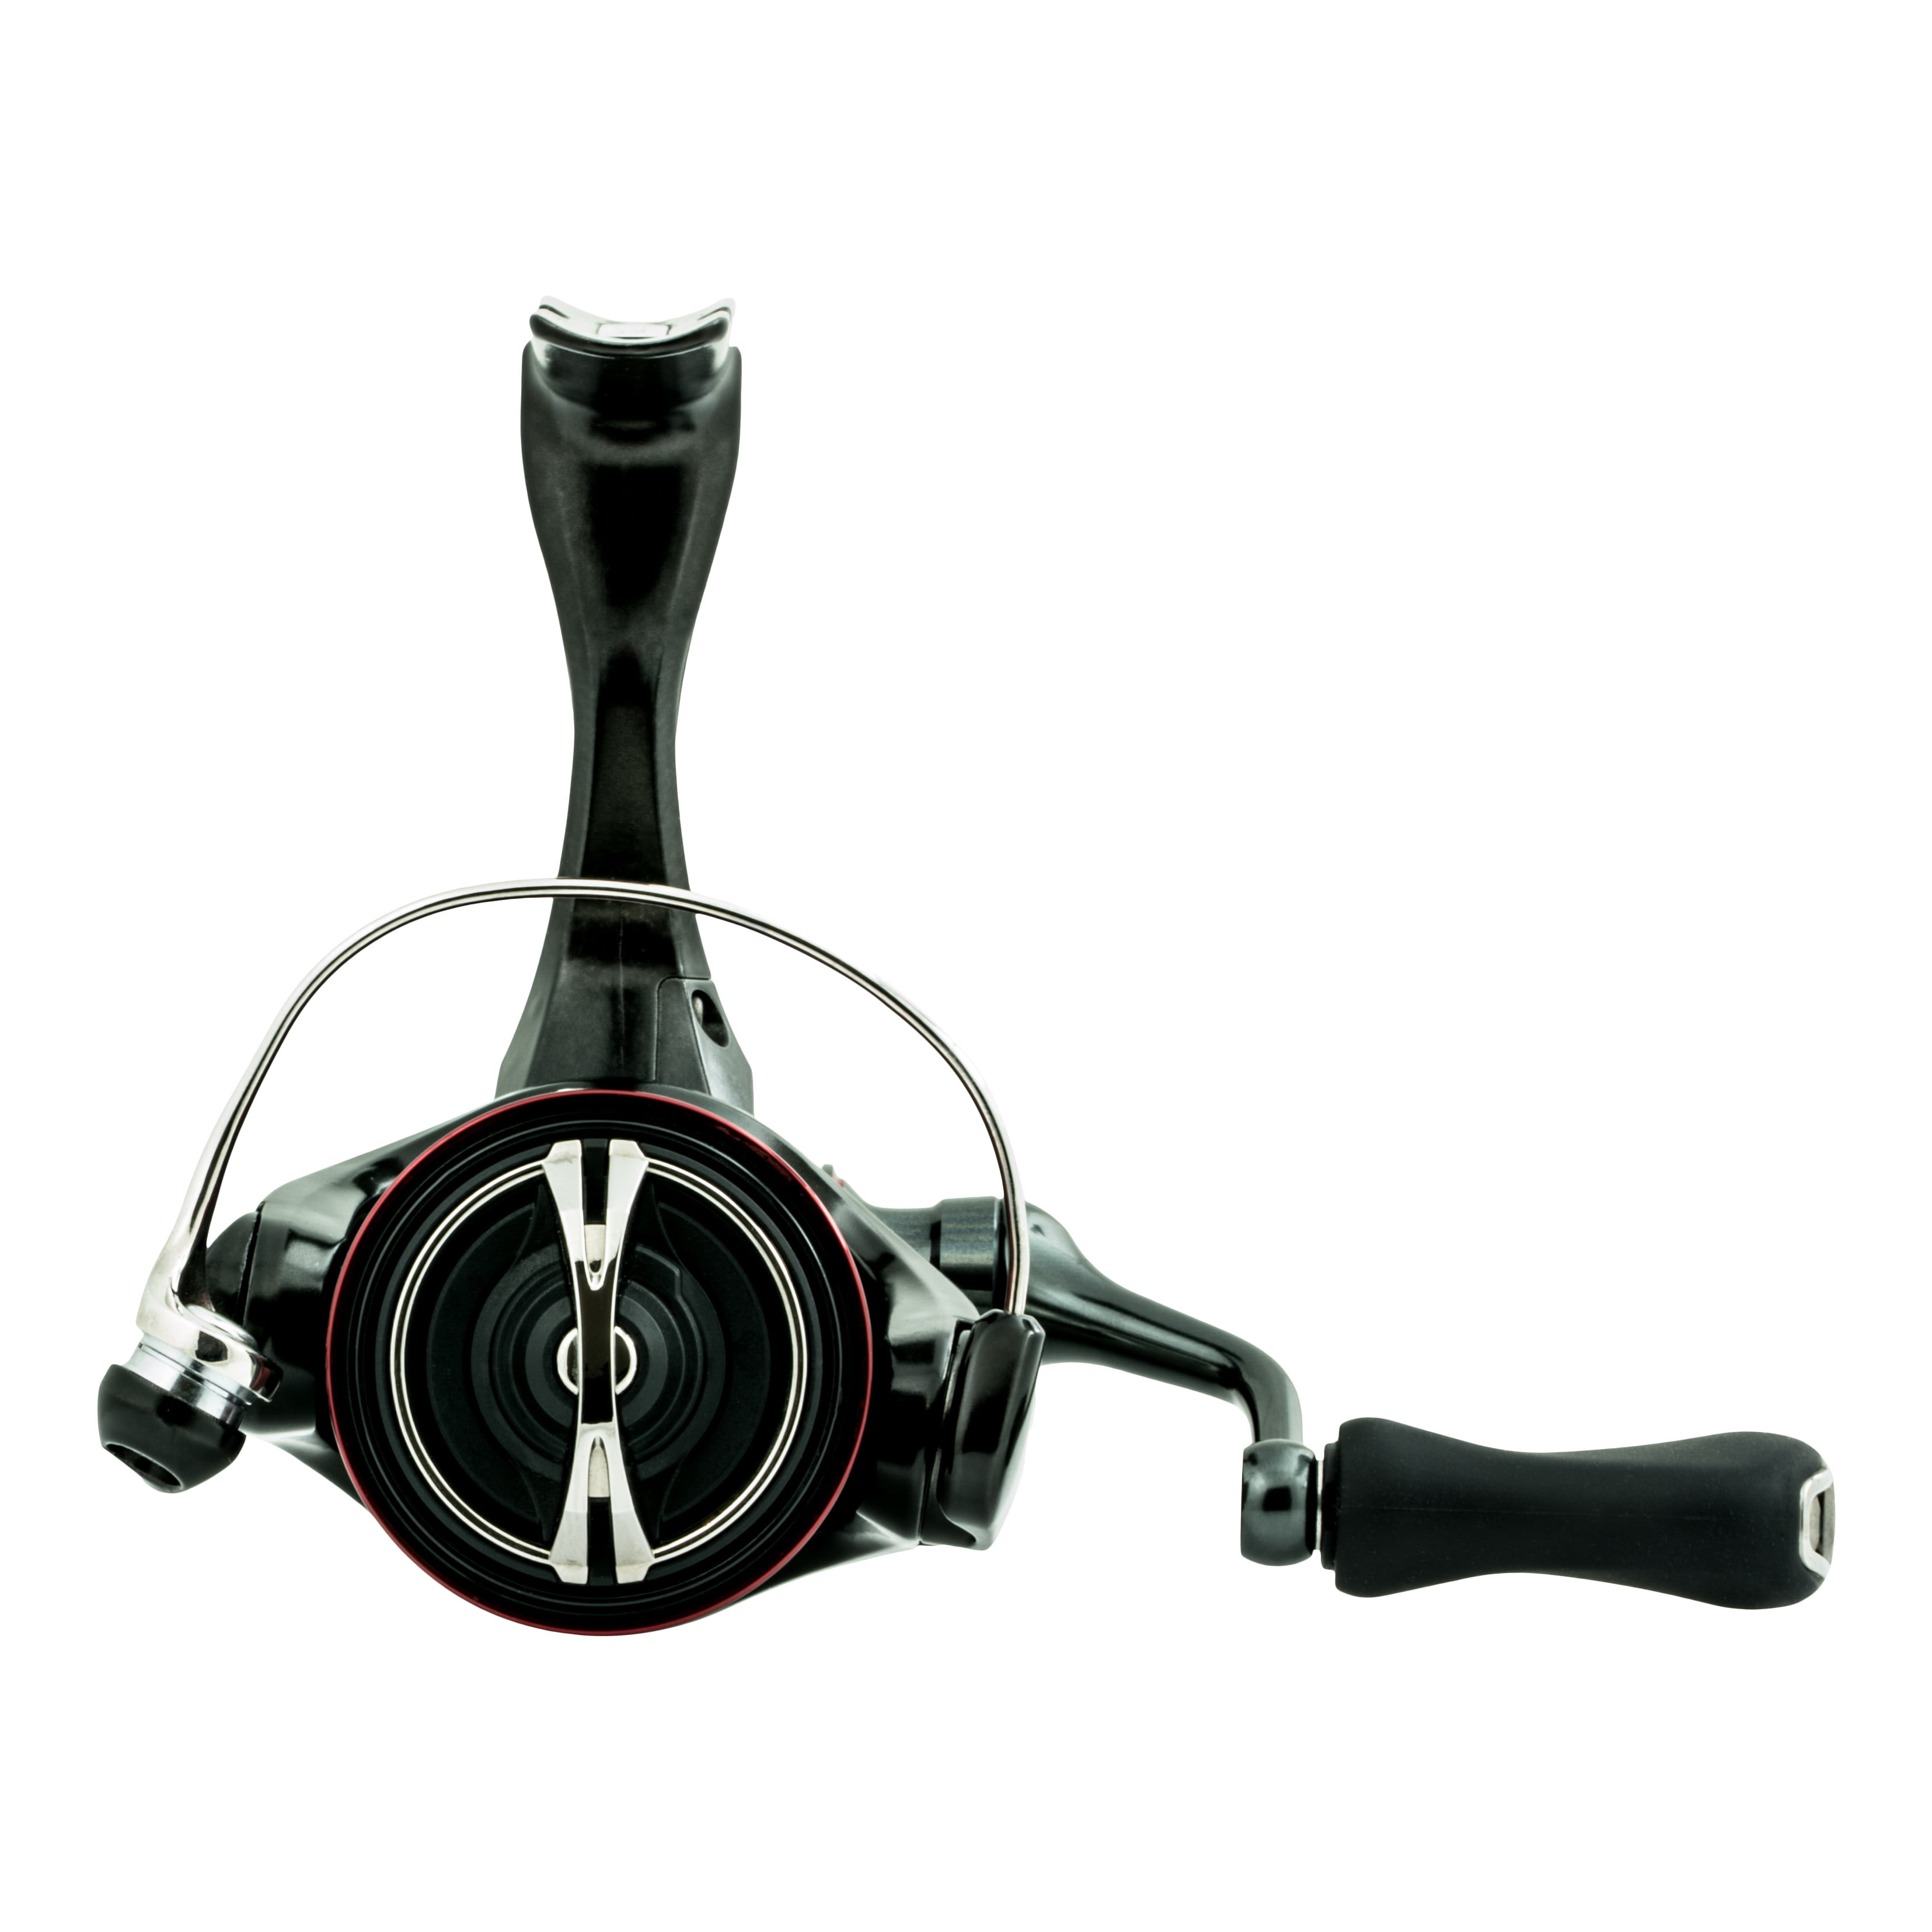 Shimano Vanford 1000 F MGL Rotor Spinning Fishing Reel (Gear 6.0:1/2500 Size )